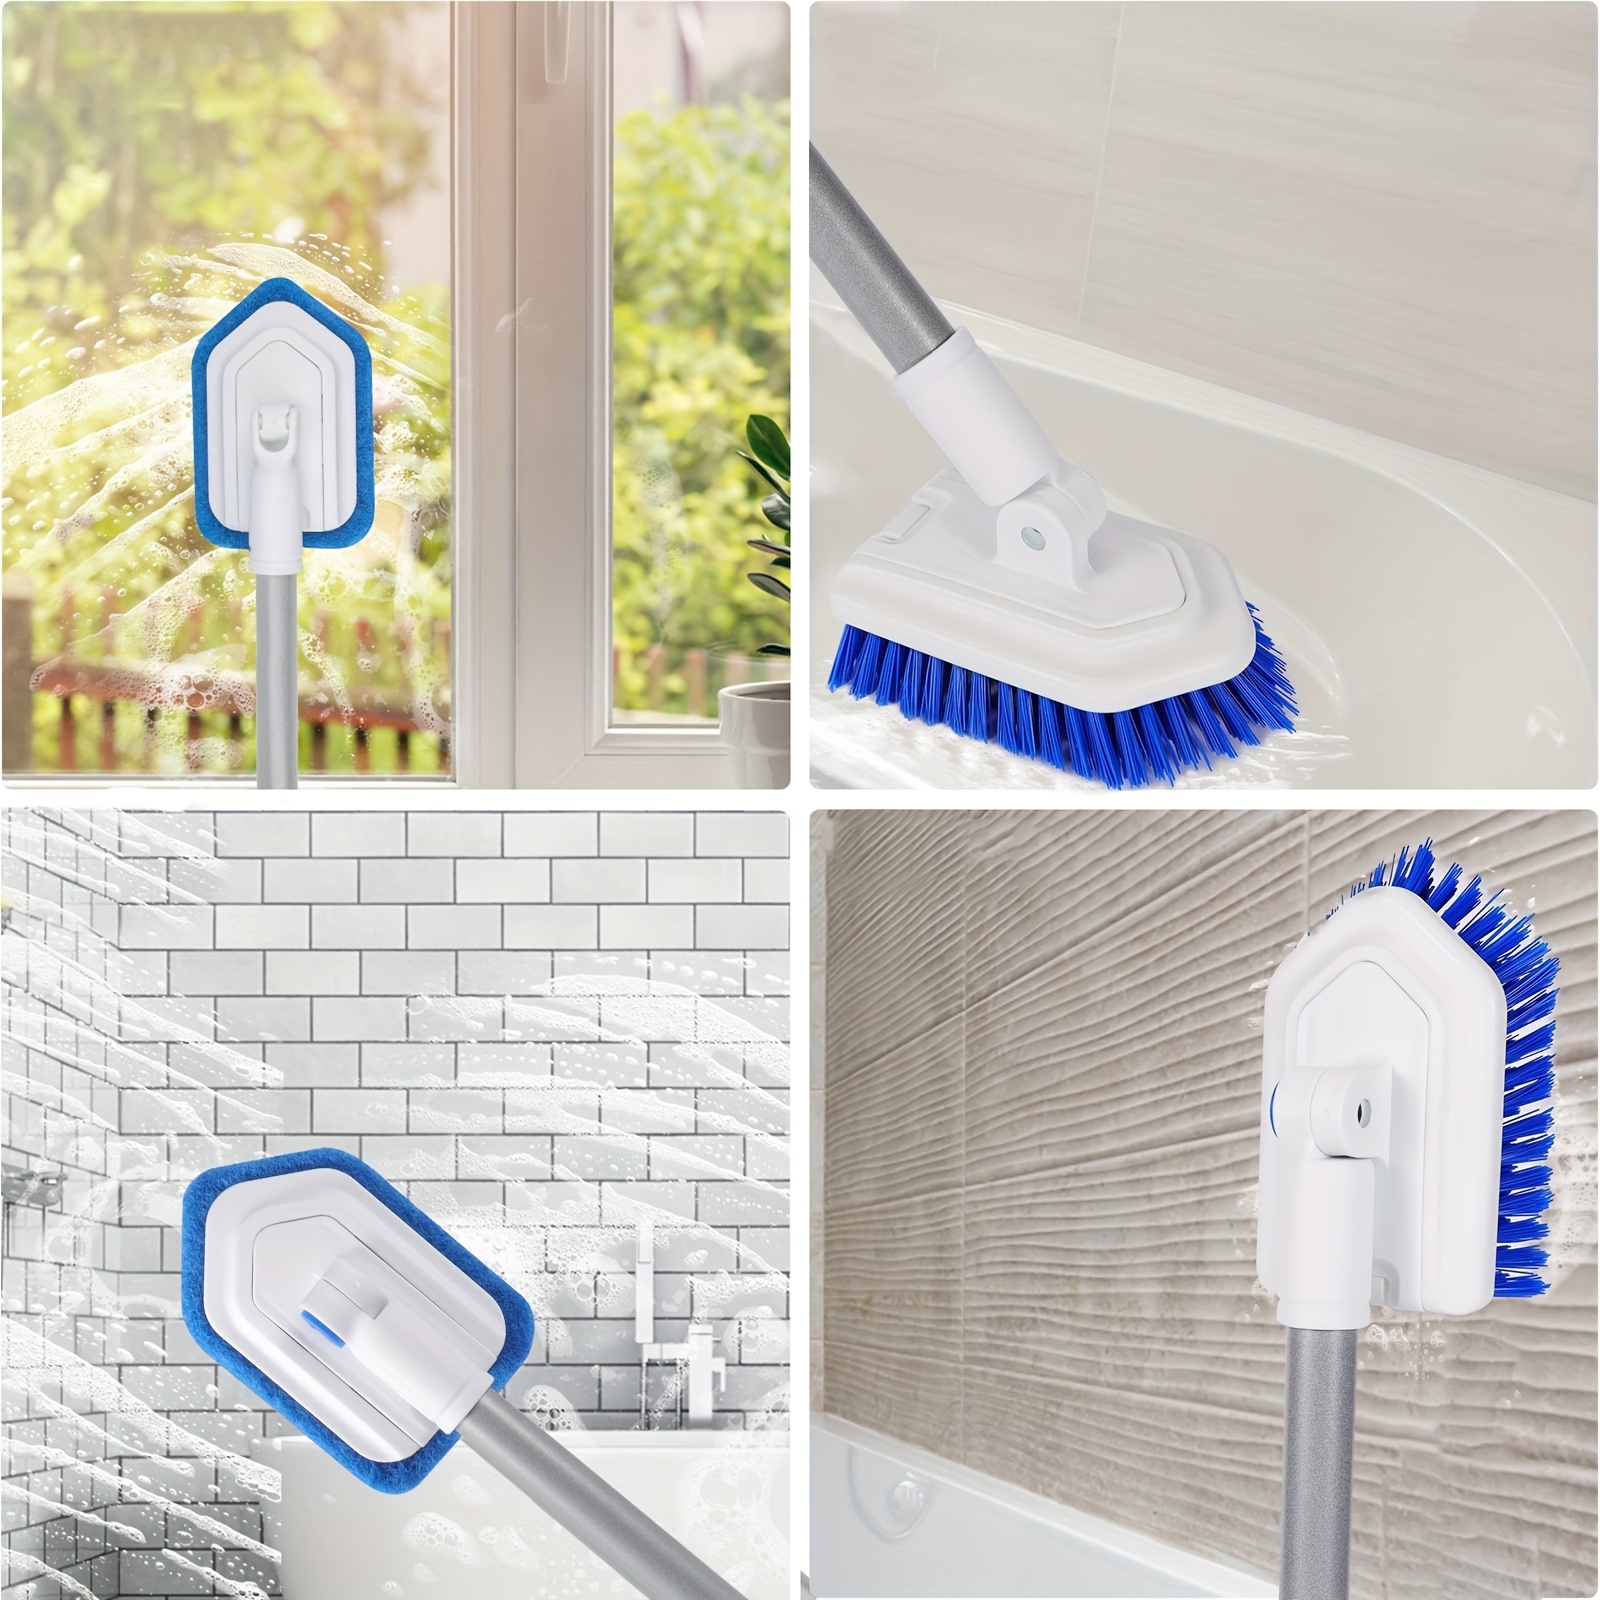 Qaestfy Shower Bathtub Tile Scrubber Brush with Extendable